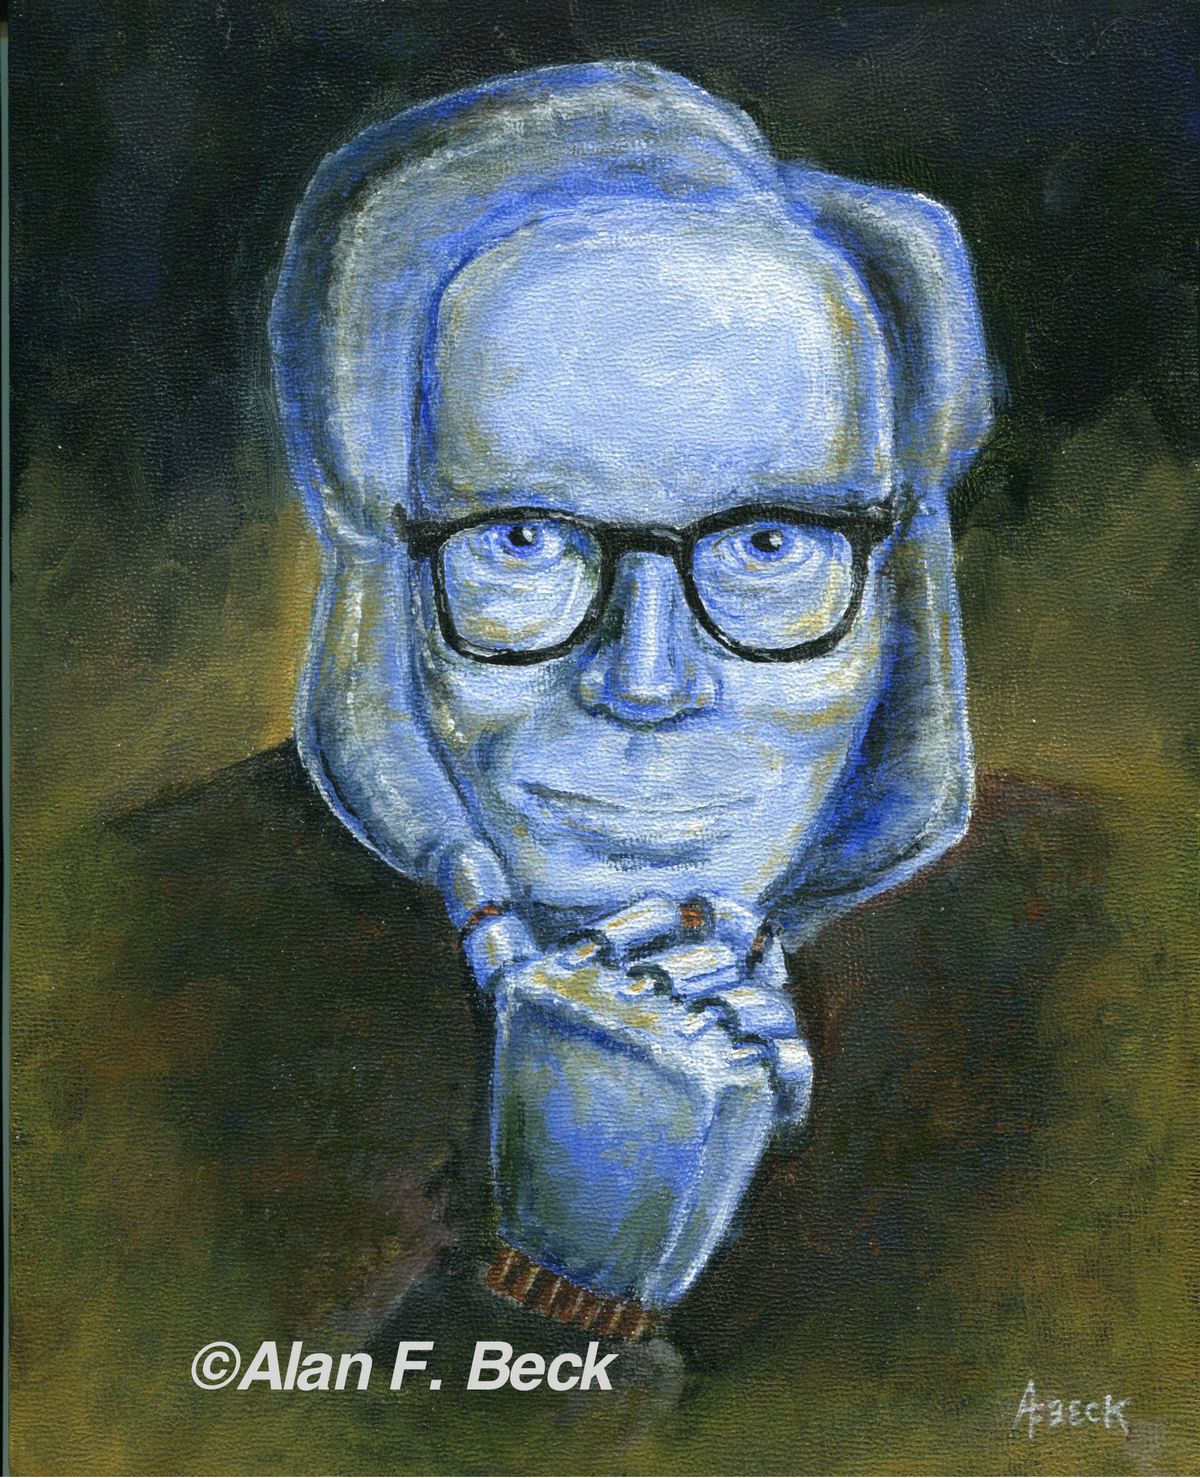 i-Asimov art by Alan F. Beck